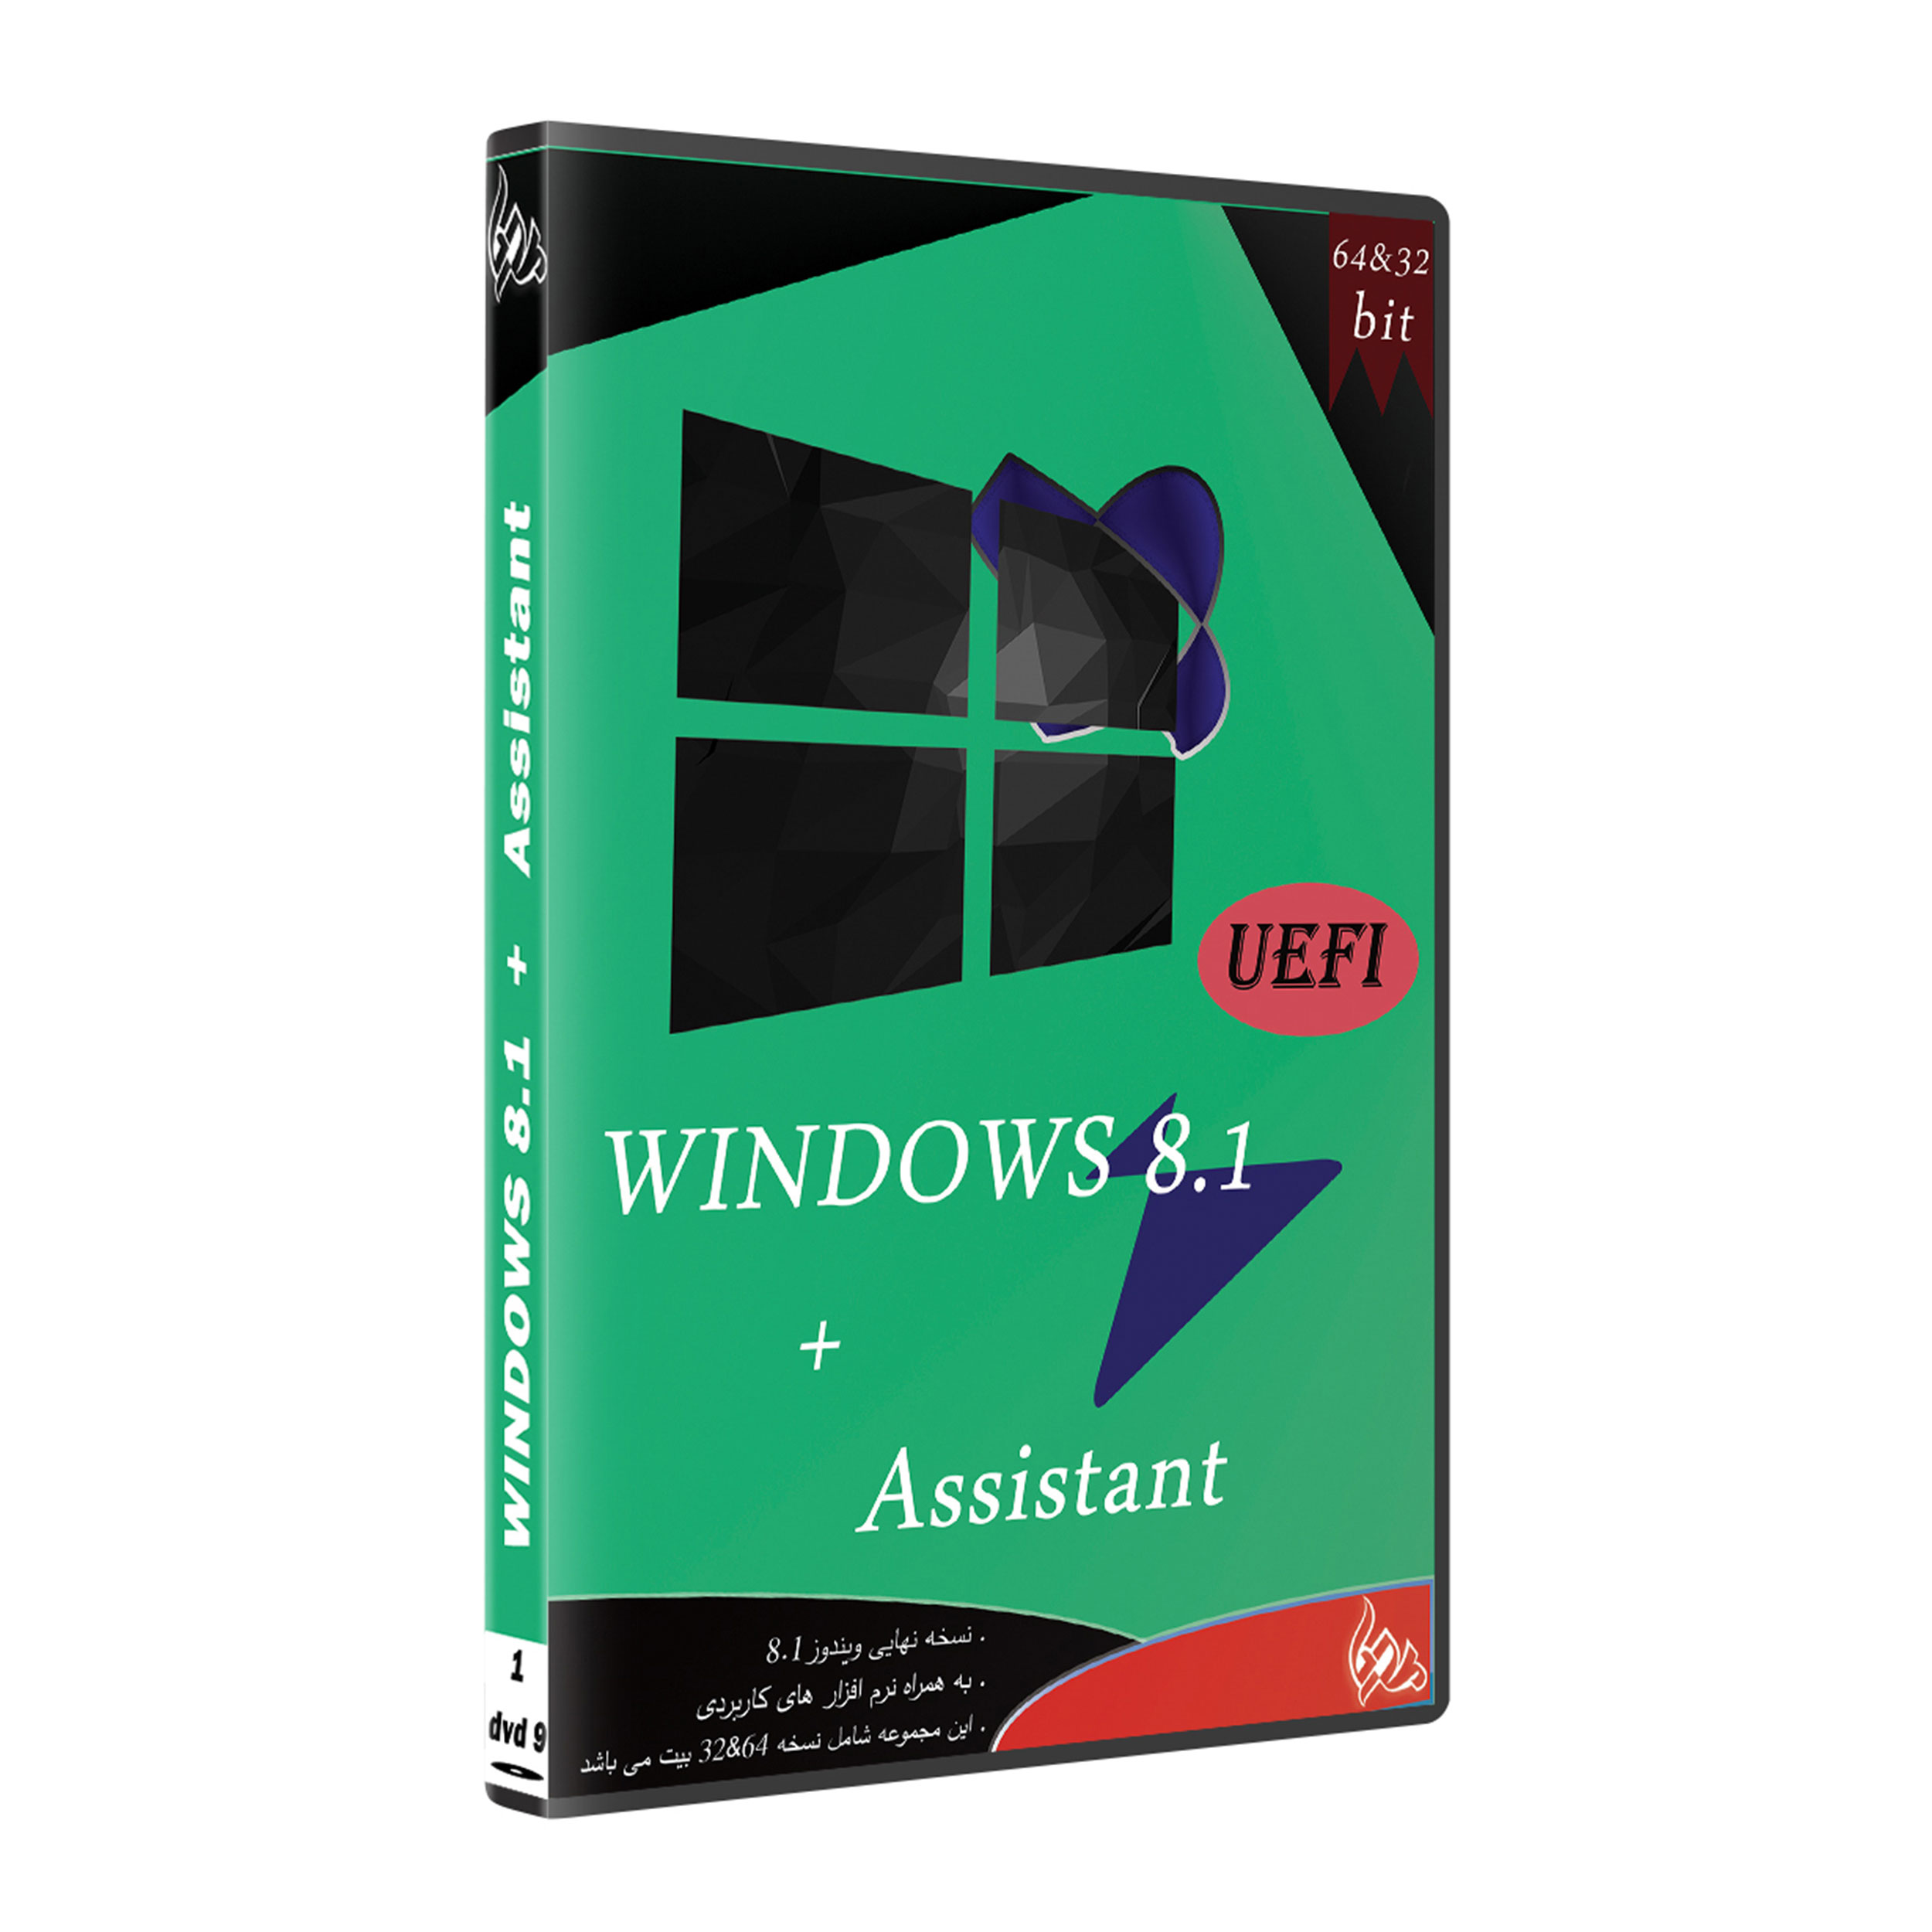  سیستم عامل Windows 8.1 UEFI + ASSISTANT  نشر پدیا